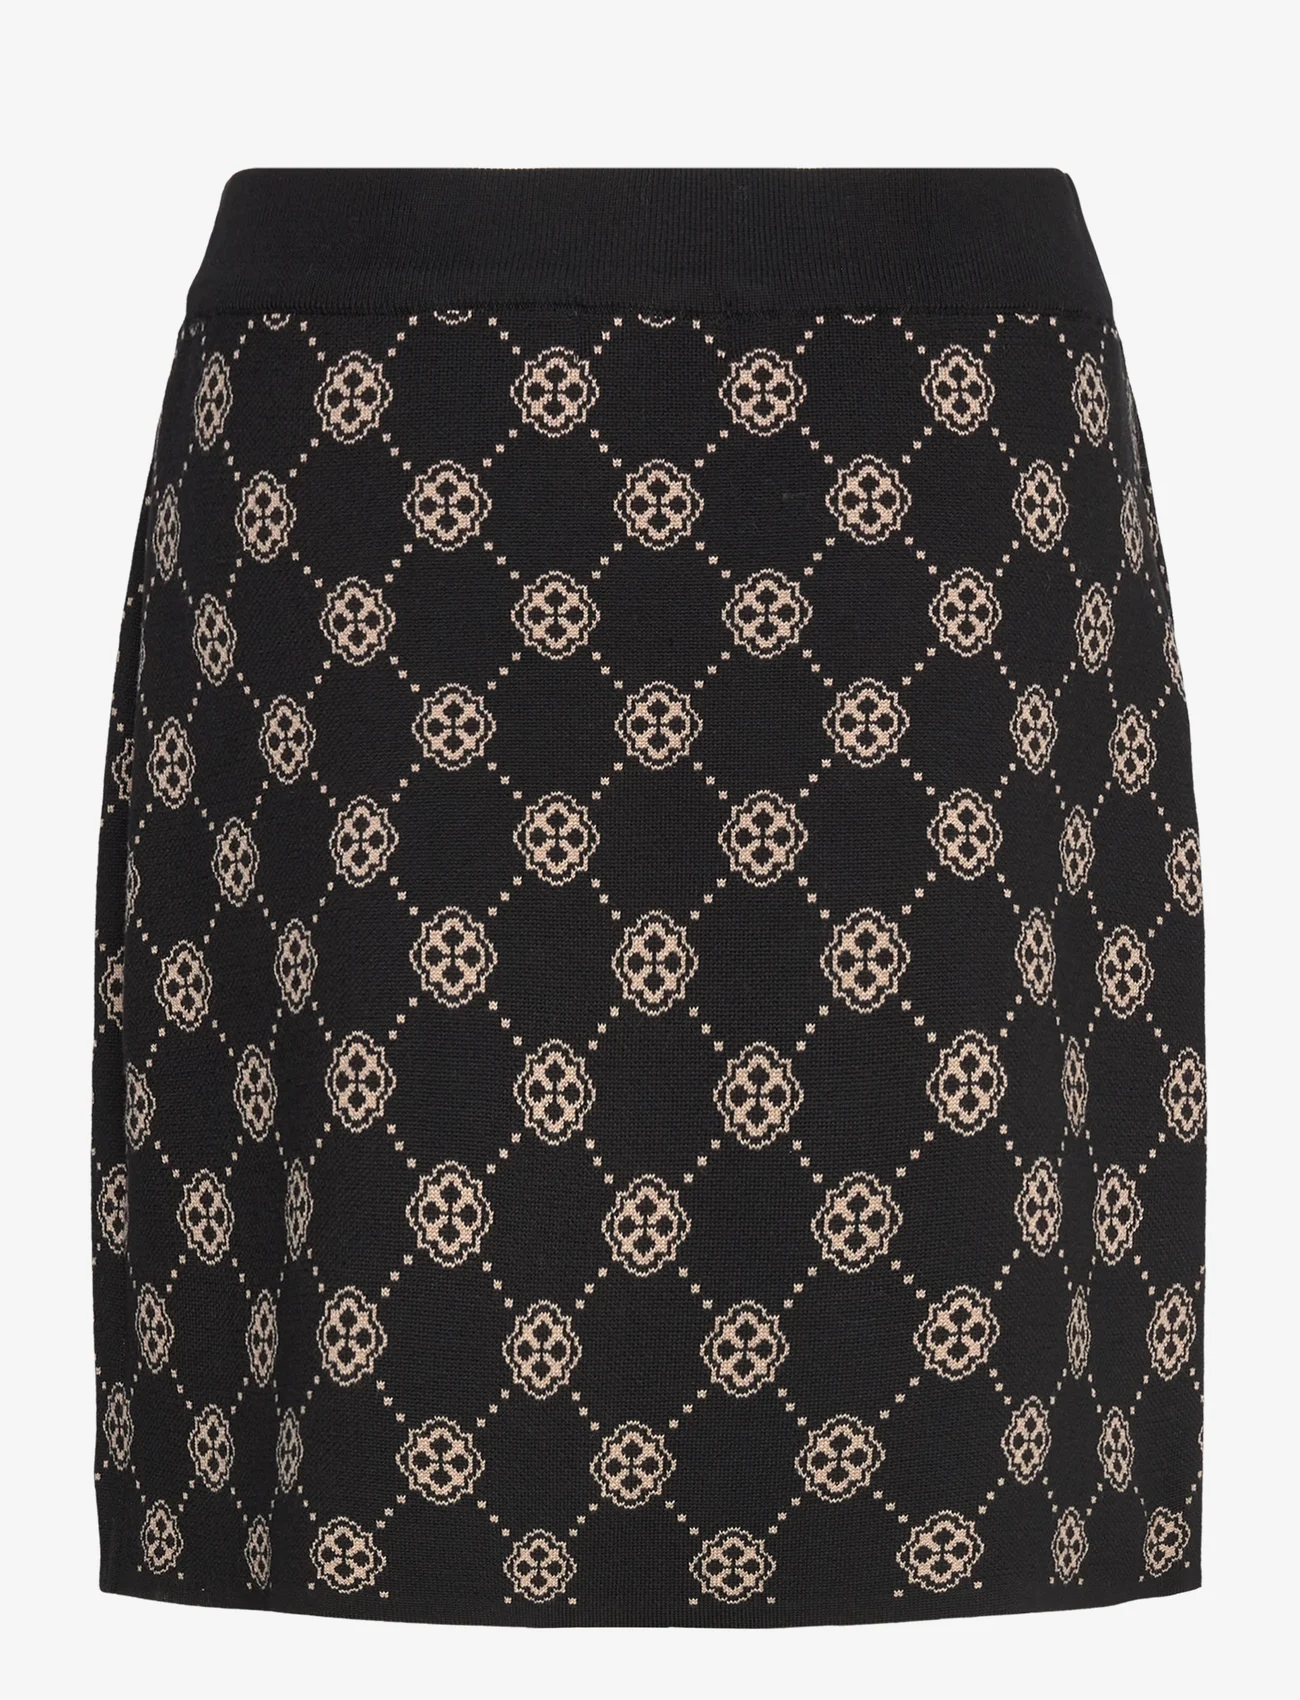 Lindex - Skirt Meja knitted - stickade kjolar - black - 1